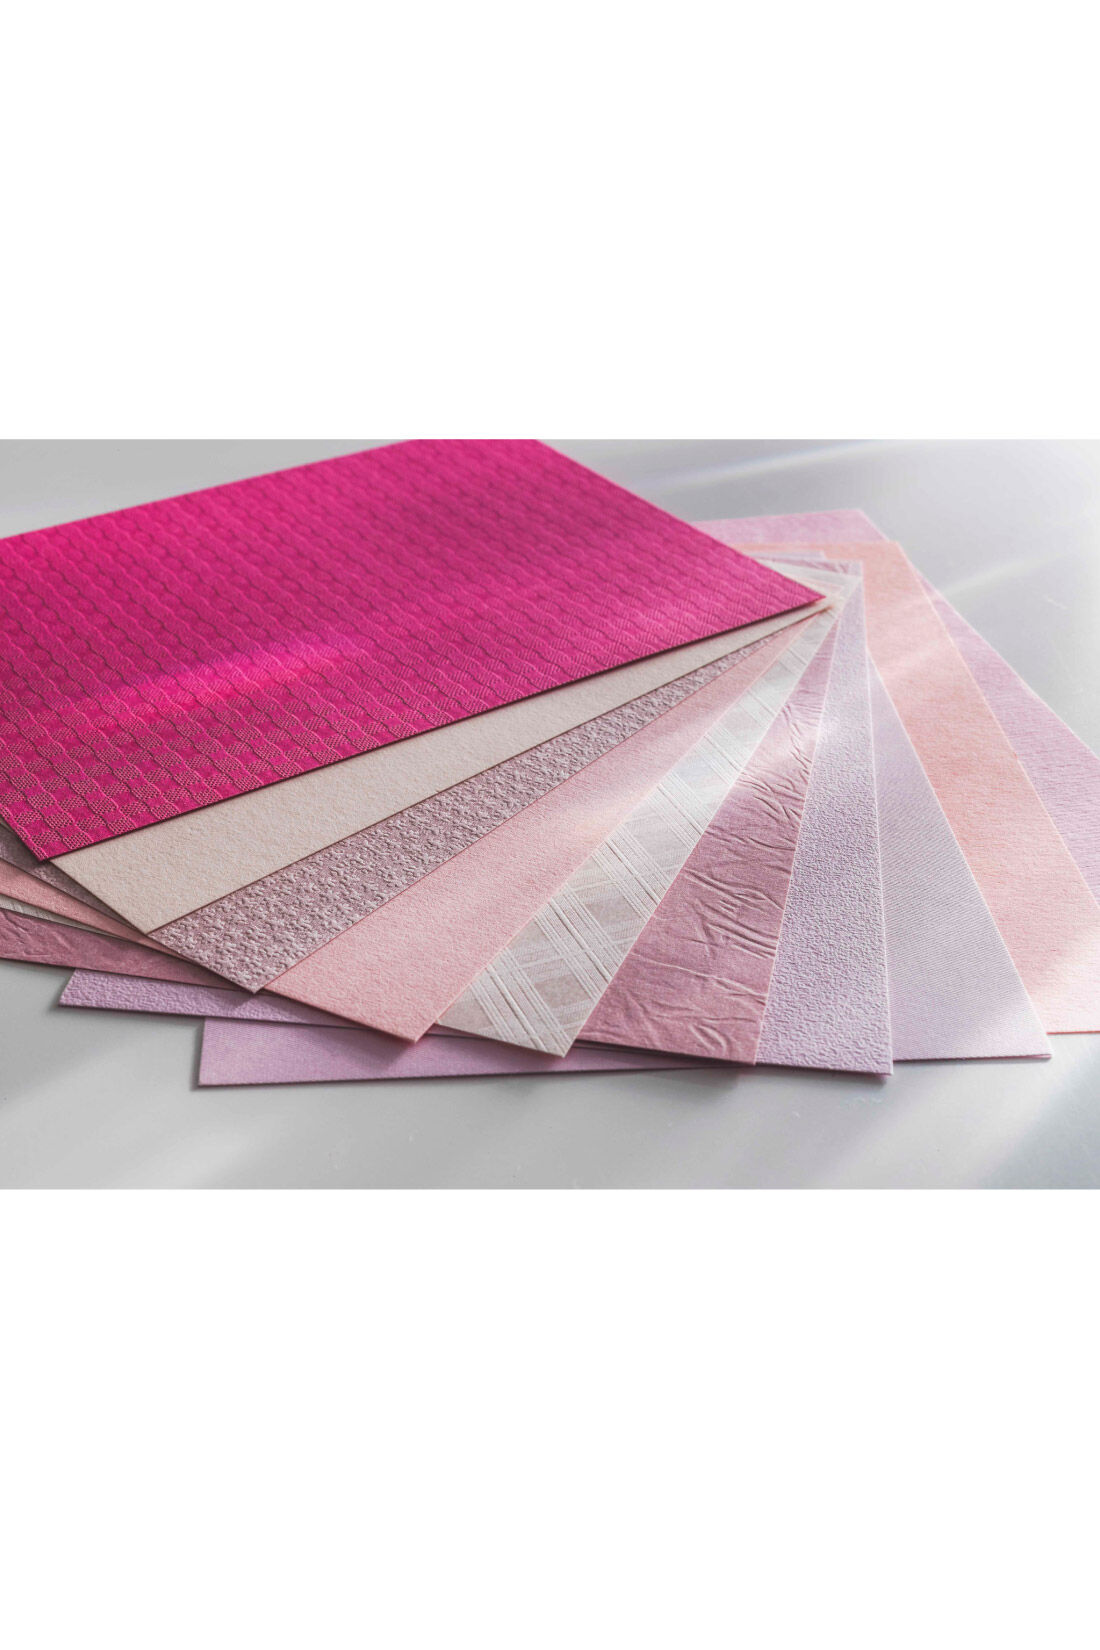 OSYAIRO|OSYAIRO 紙の専門商社竹尾が選ぶ　色を楽しむ紙セットの会〈桃〉|かわいいピンク。地模様も楽しいです。